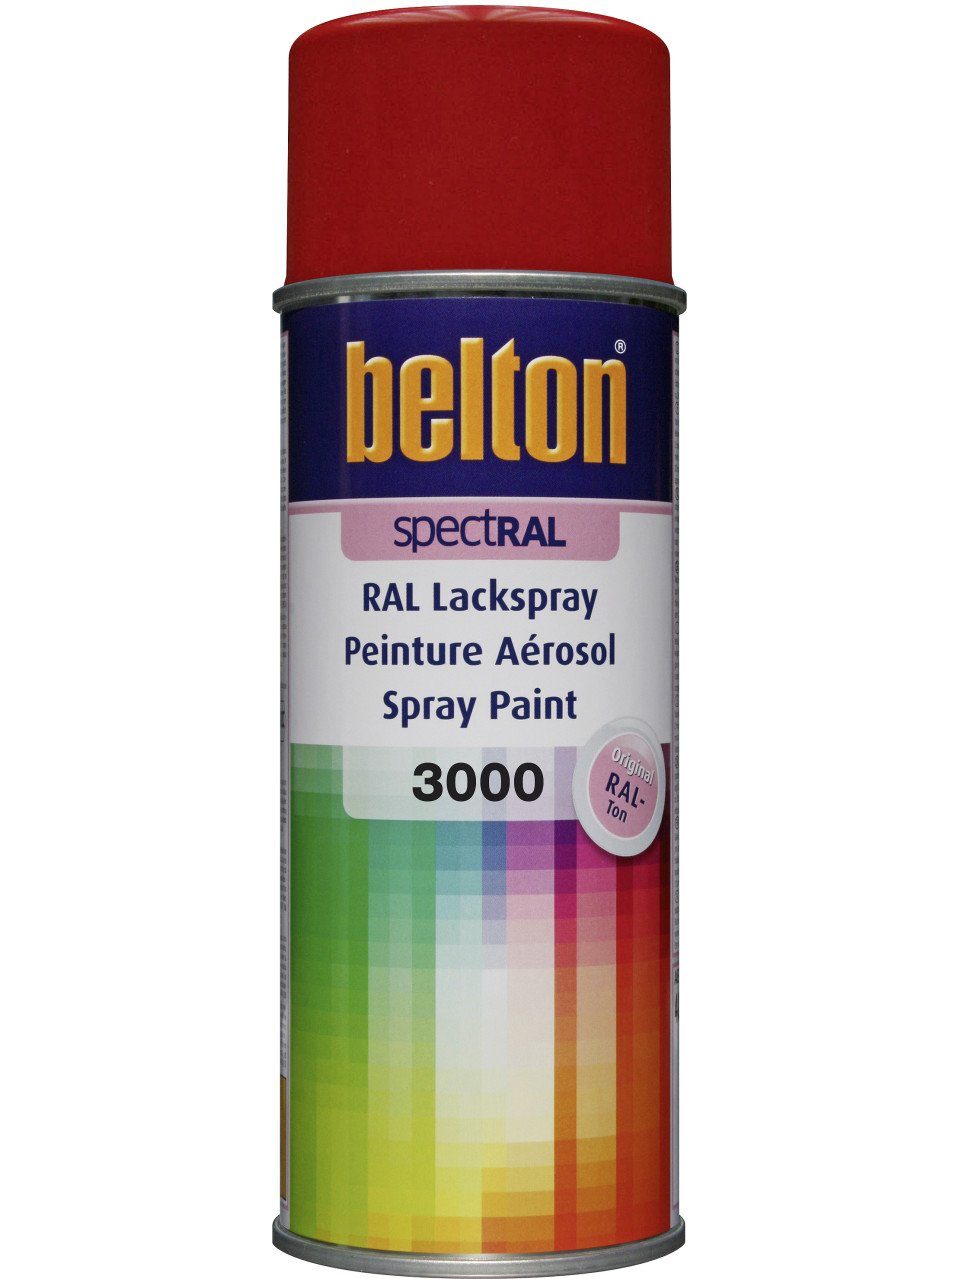 Sprühlack Belton Lackspray feuerrot 400 ml belton Spectral